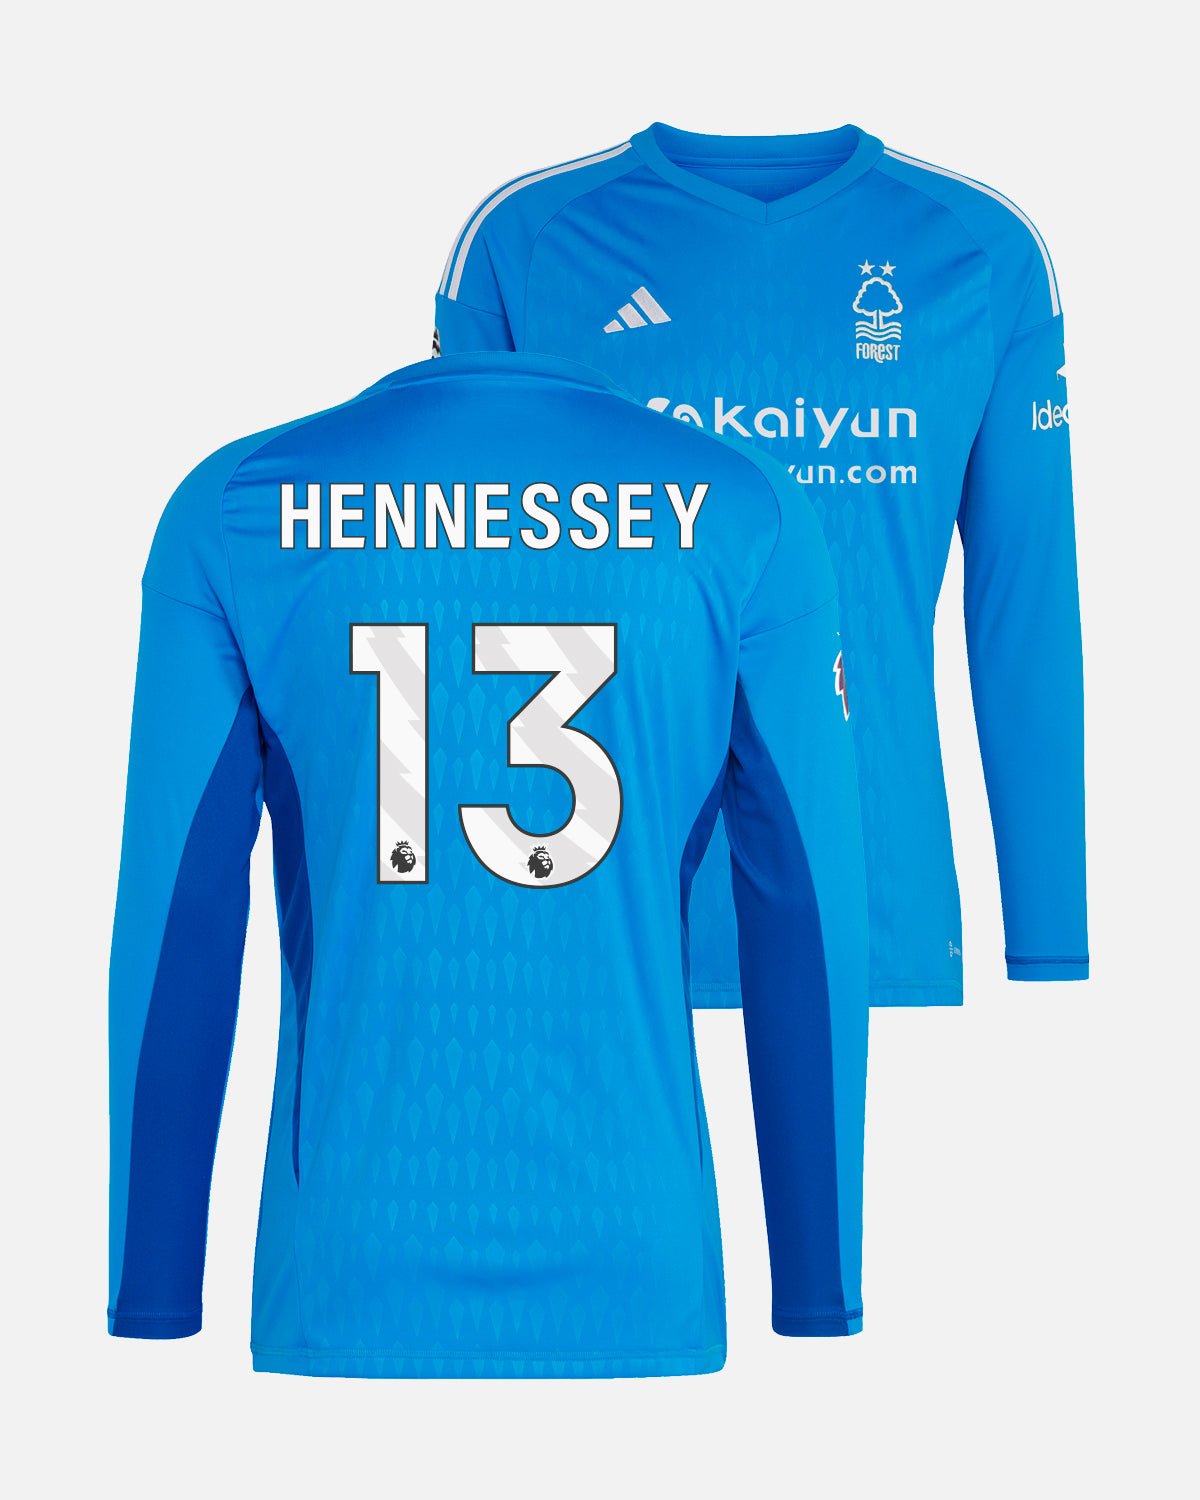 NFFC Blue Goalkeeper Shirt 23-24 - Hennessey 13 - Nottingham Forest FC